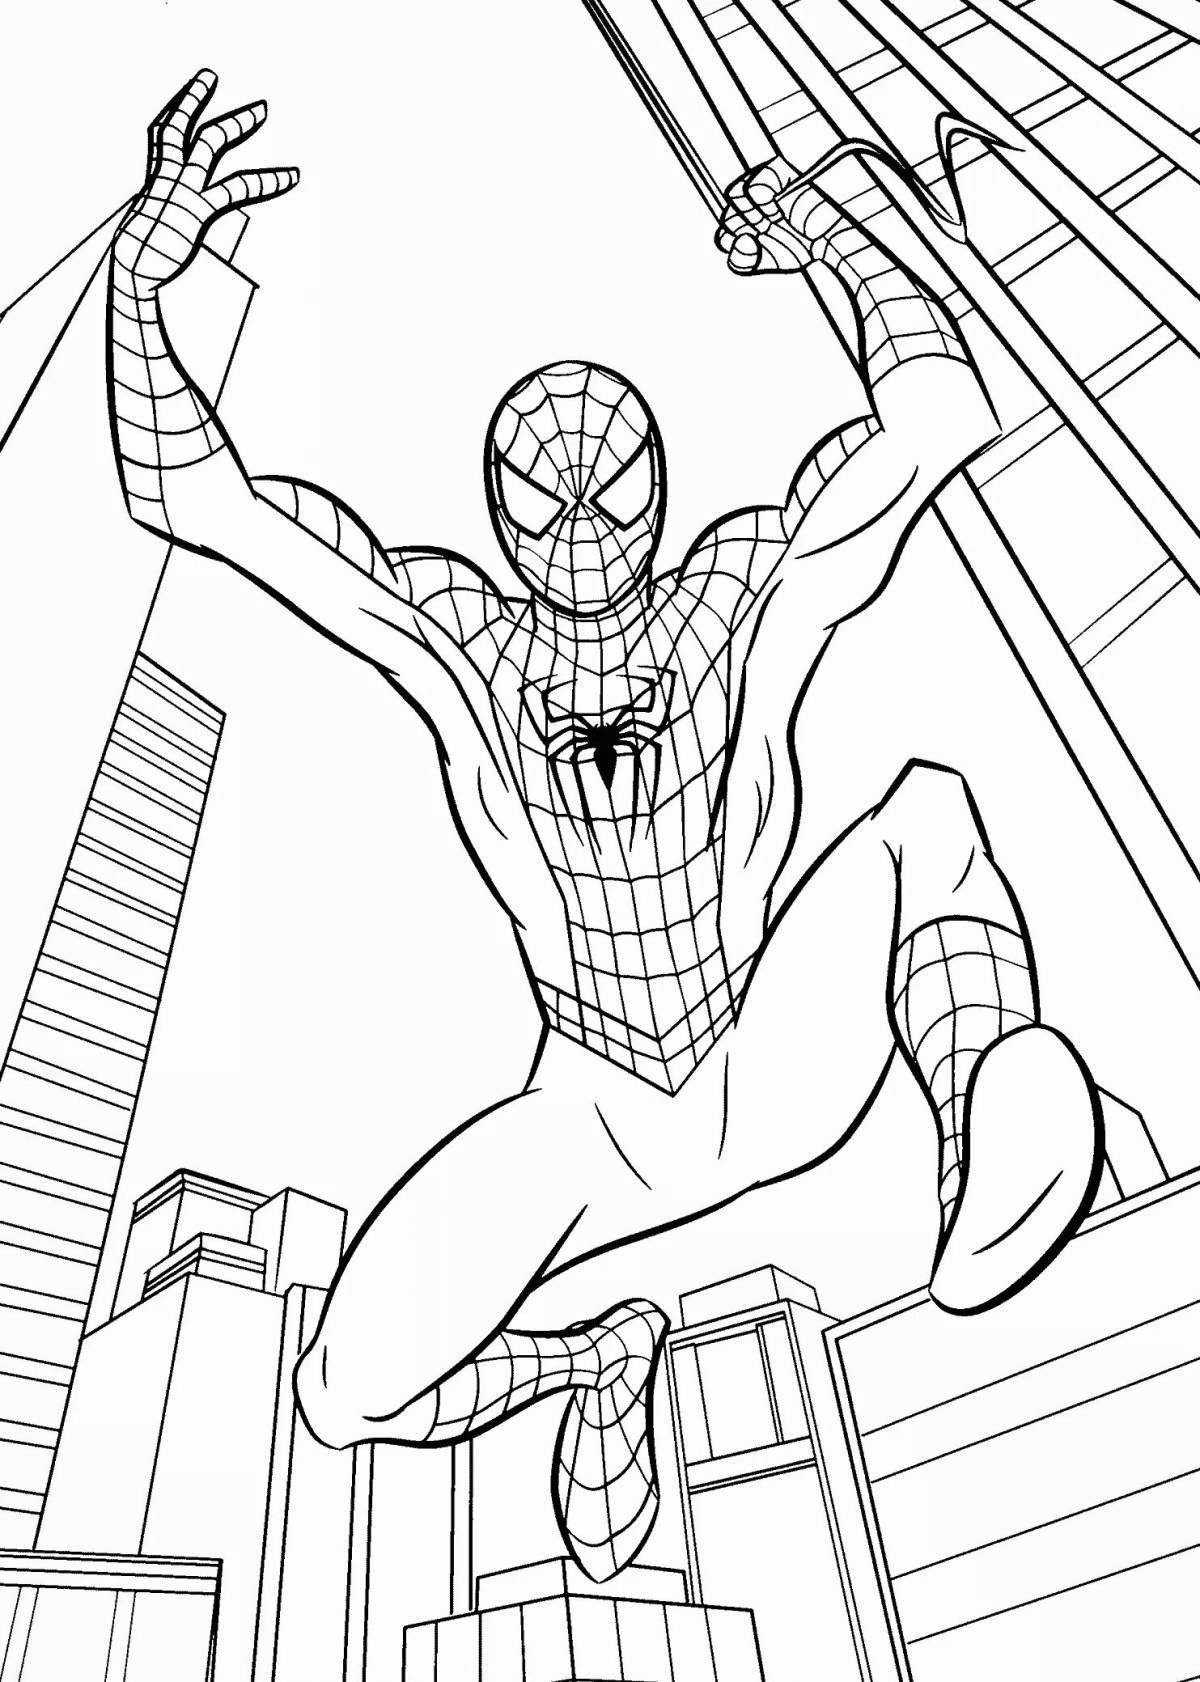 Spiderman's elegant coloring page